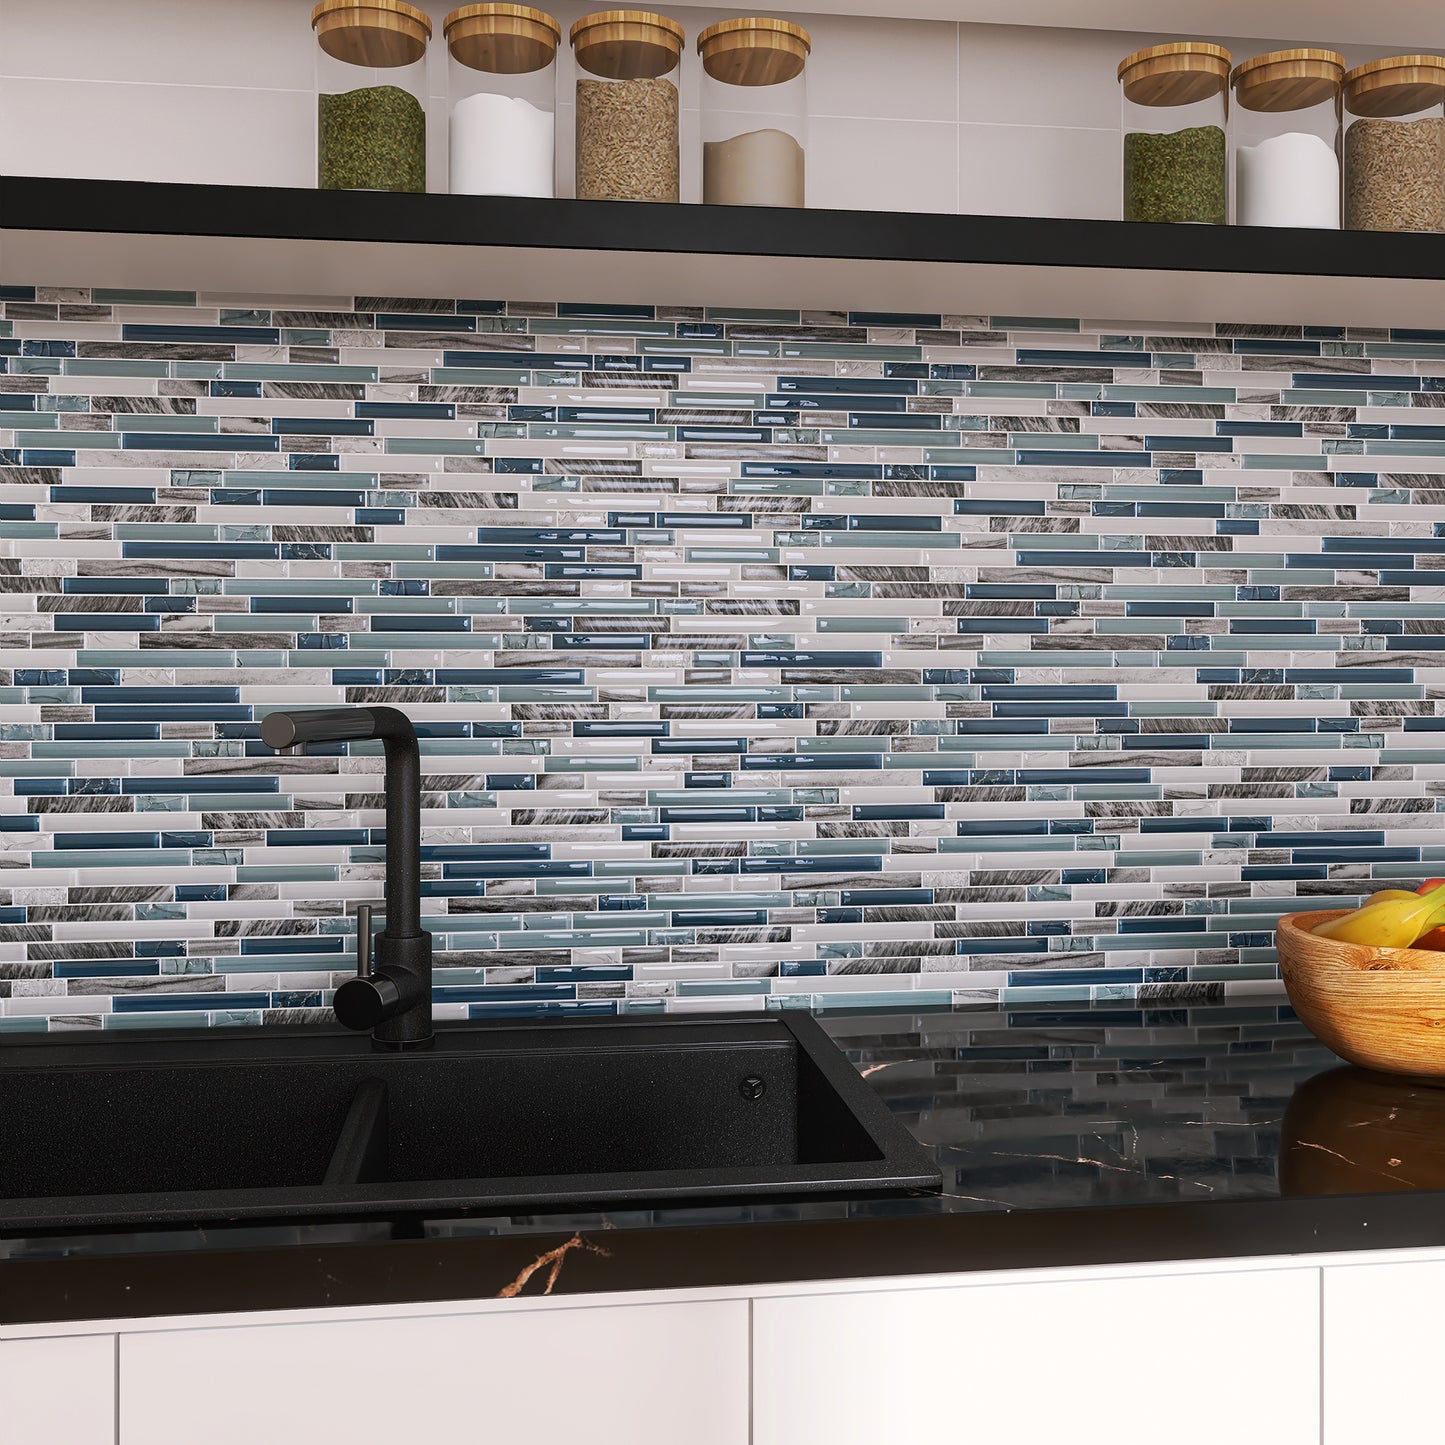 12‘’ x 12'' Kitchen backsplash tile 